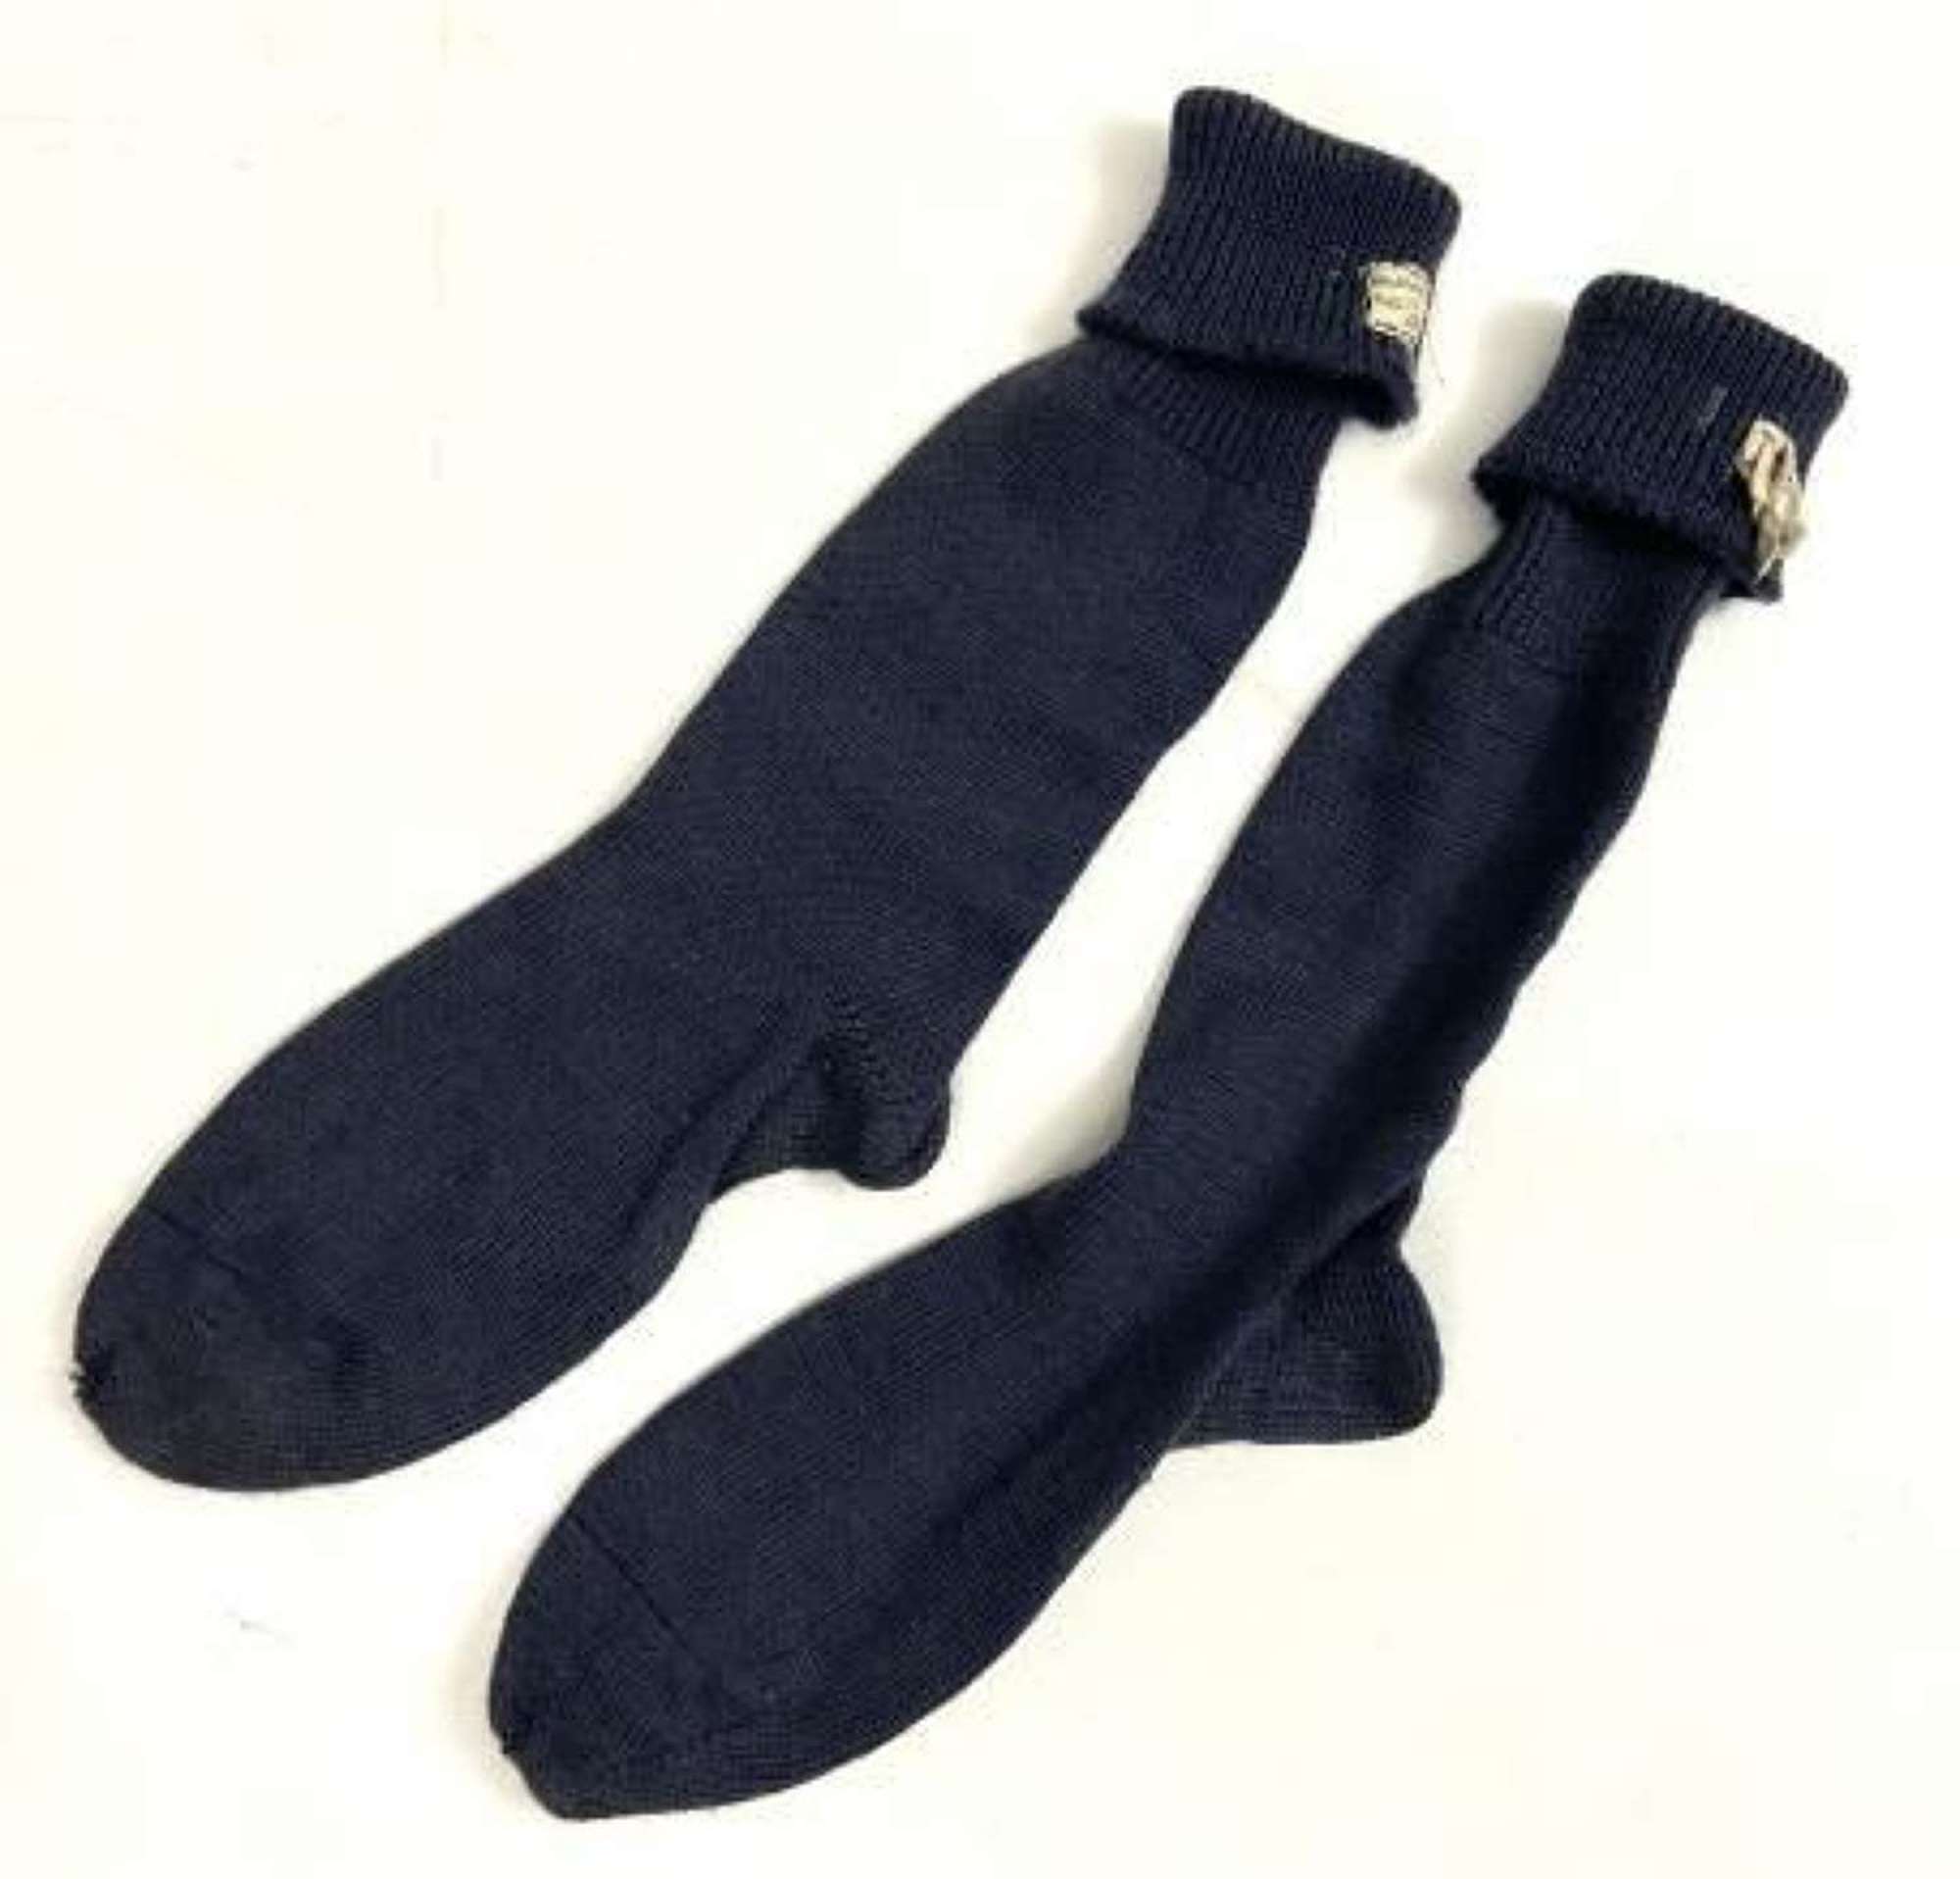 Original 1957 Dated RAF Ordinary Airman’s Socks